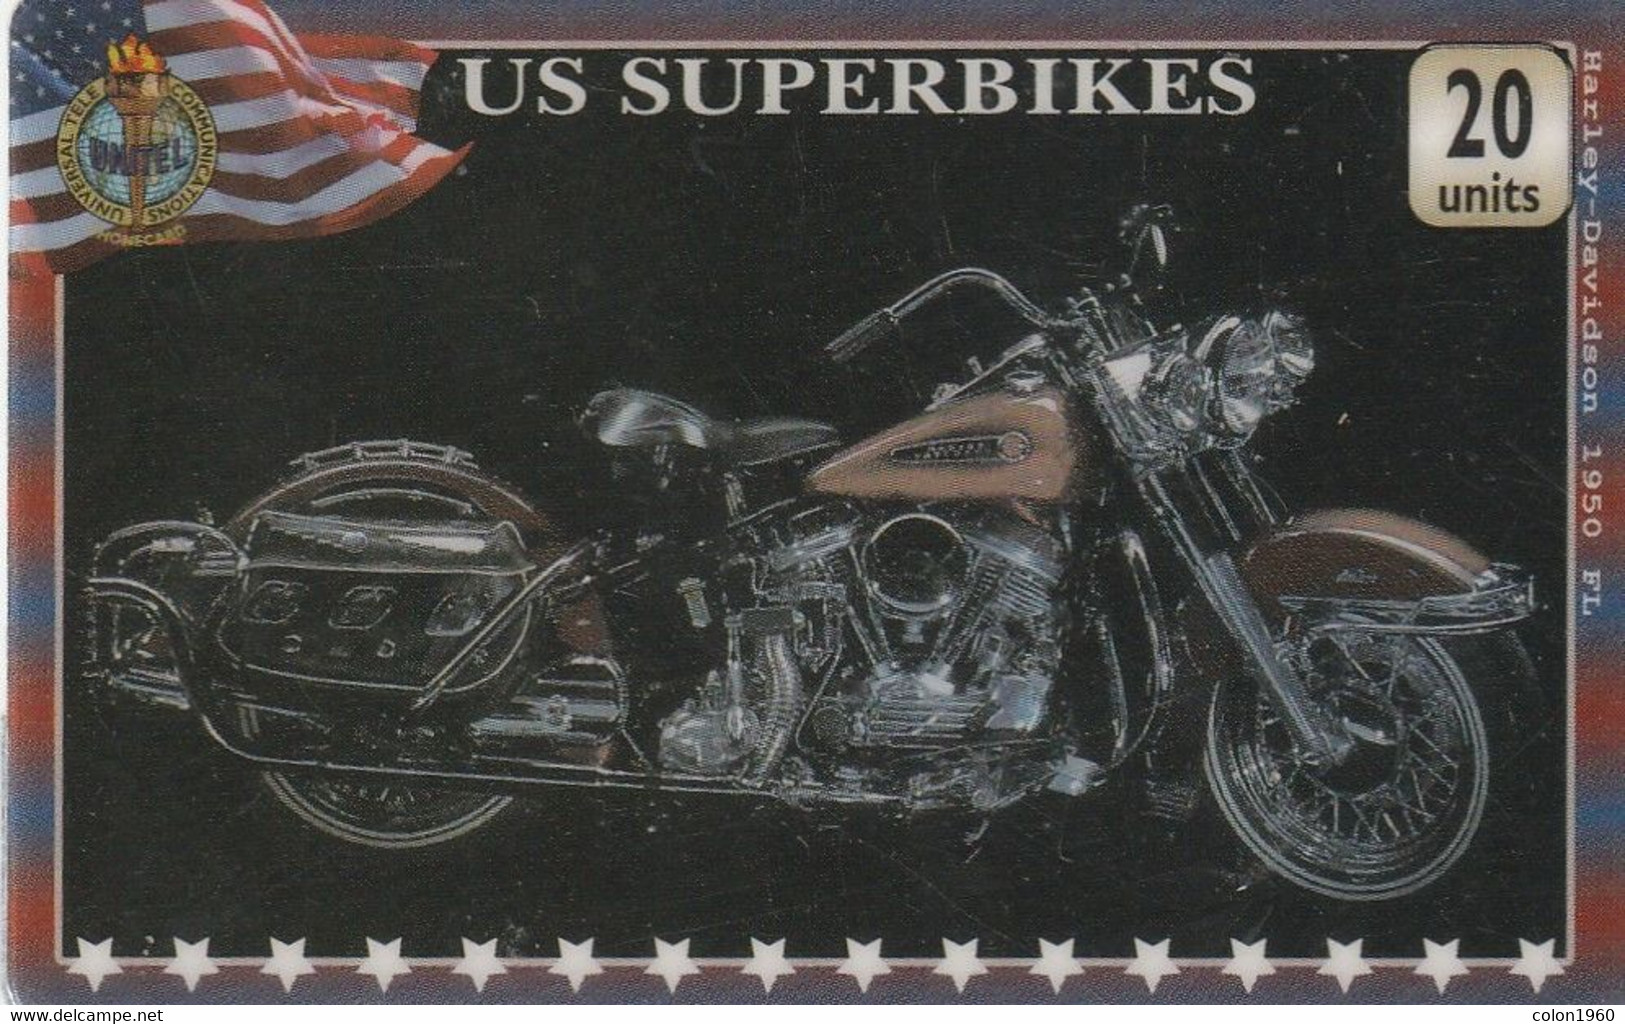 REINO UNIDO. MOTO - MOTORCYCLE. HARLEY DAVIDSON 1950 FL. US SUPERBIKES. UNI-Bike-0236. (798) - Motorräder